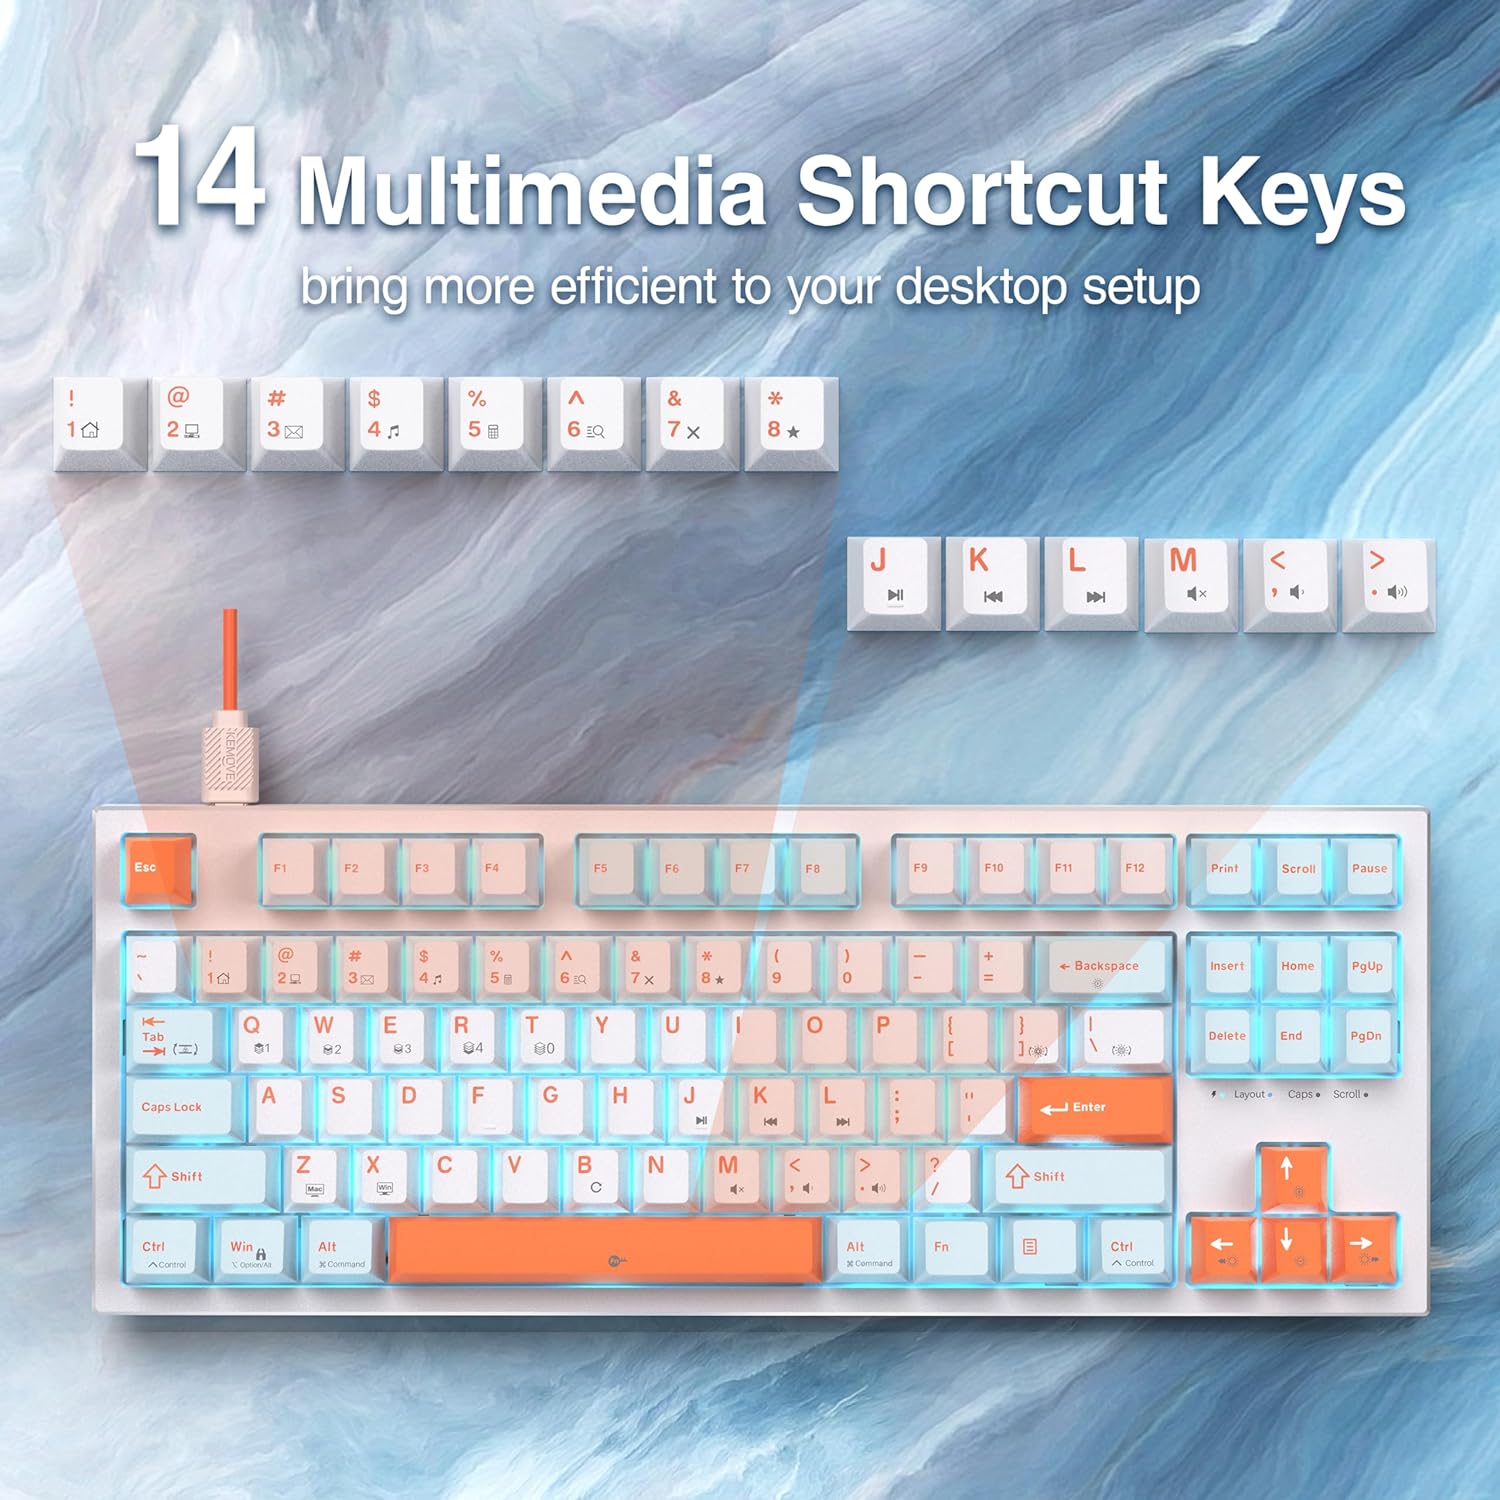 Mechanical Gaming Keyboard TKL Compact Wired Gaming Keyboard LED Backlit